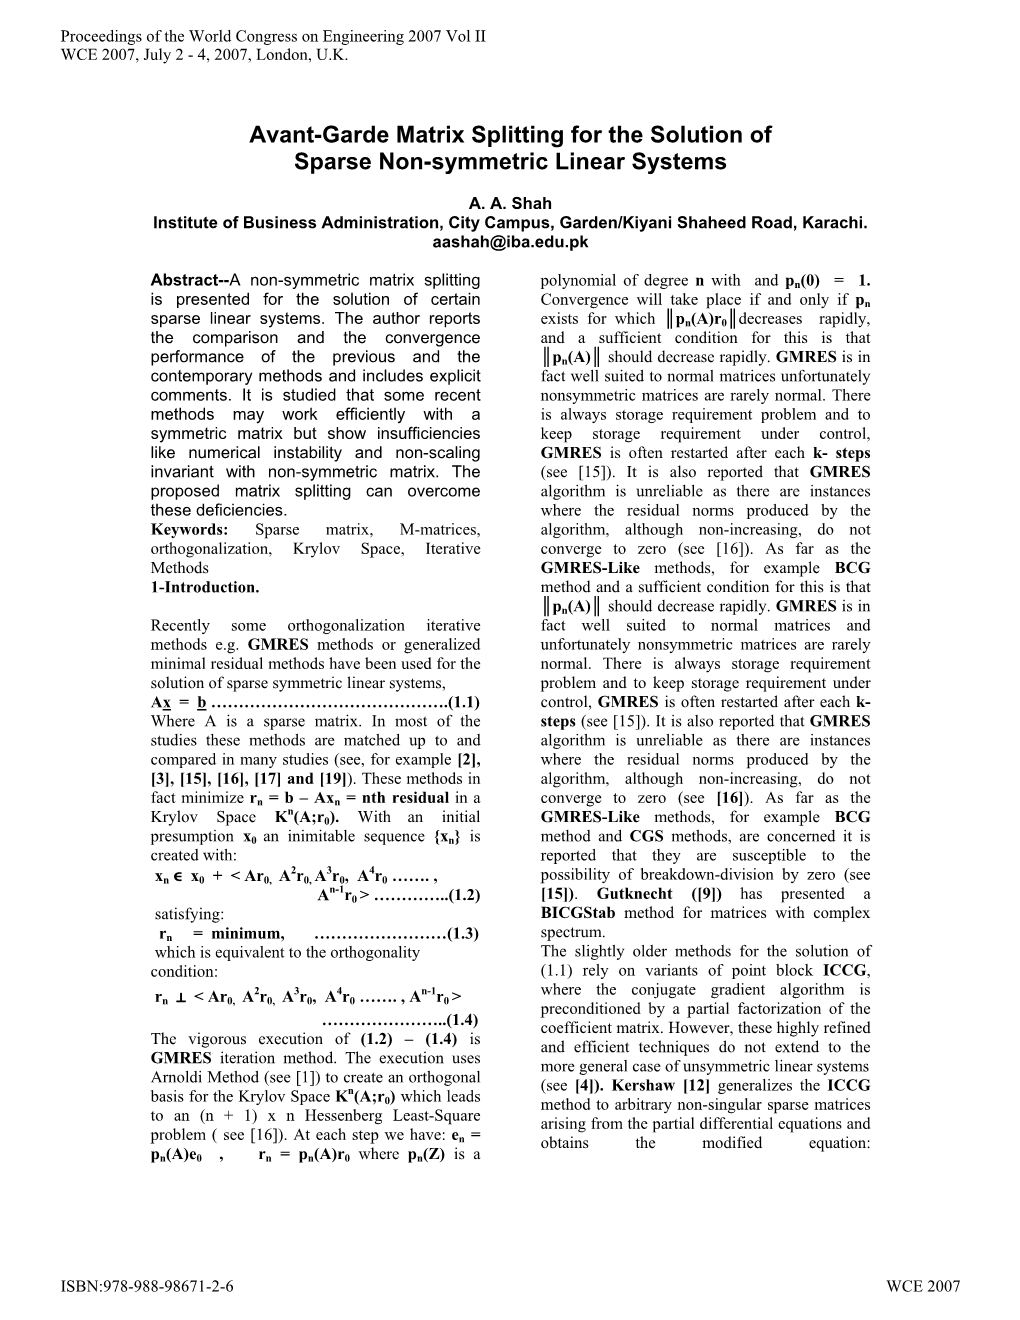 Avant-Garde Matrix Splitting for the Solution of Sparse Non-Symmetric Linear Systems